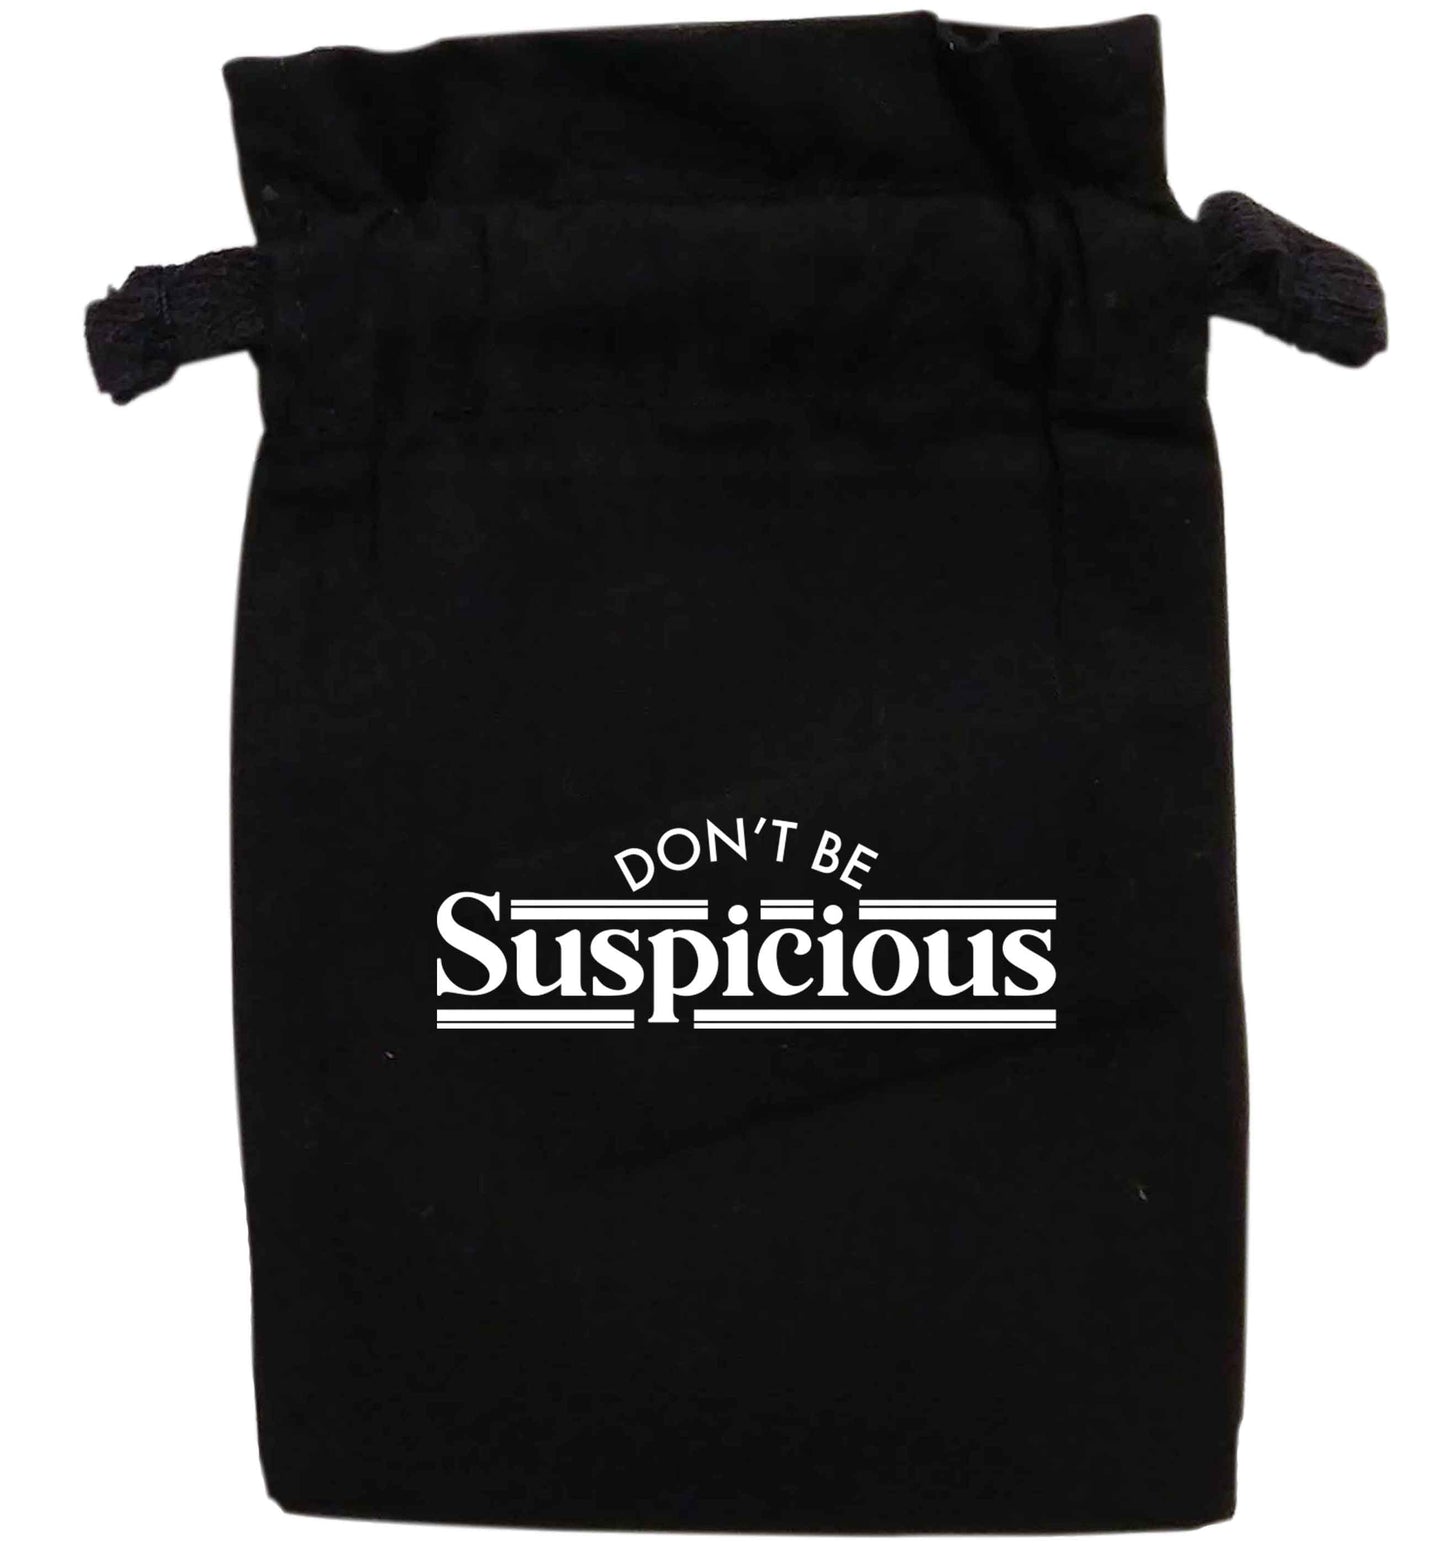 Don't be suspicious - design 3 | XS - L | Pouch / Drawstring bag / Sack | Organic Cotton | Bulk discounts available!